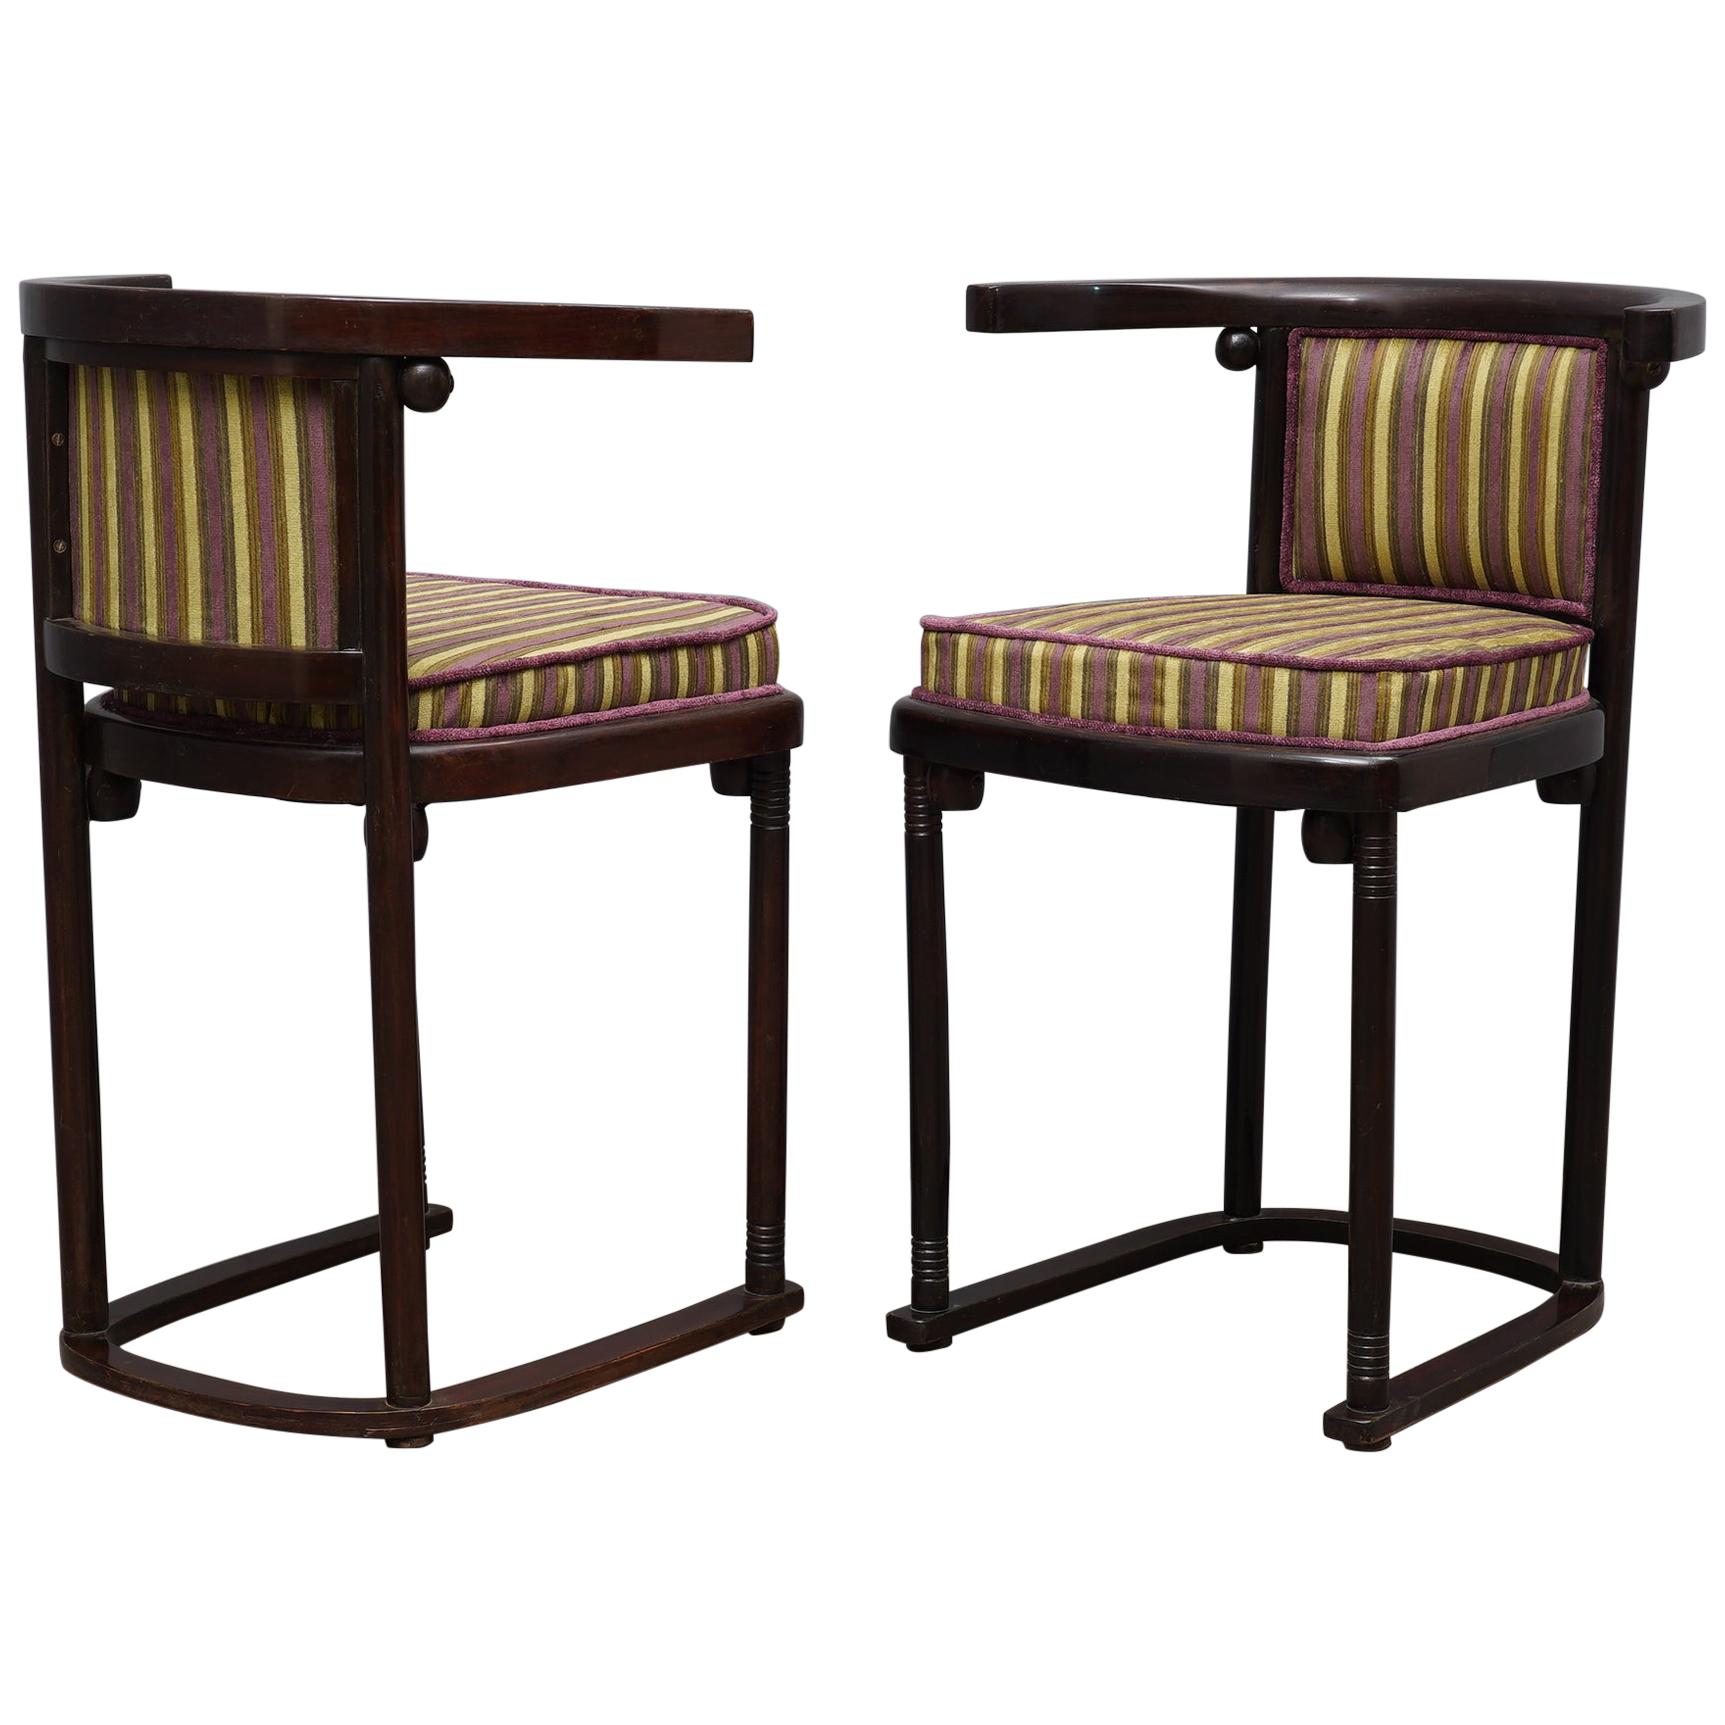 Pair of Art Nouveau Beech Wood and Striped Velvet Austrian Chairs, 1910